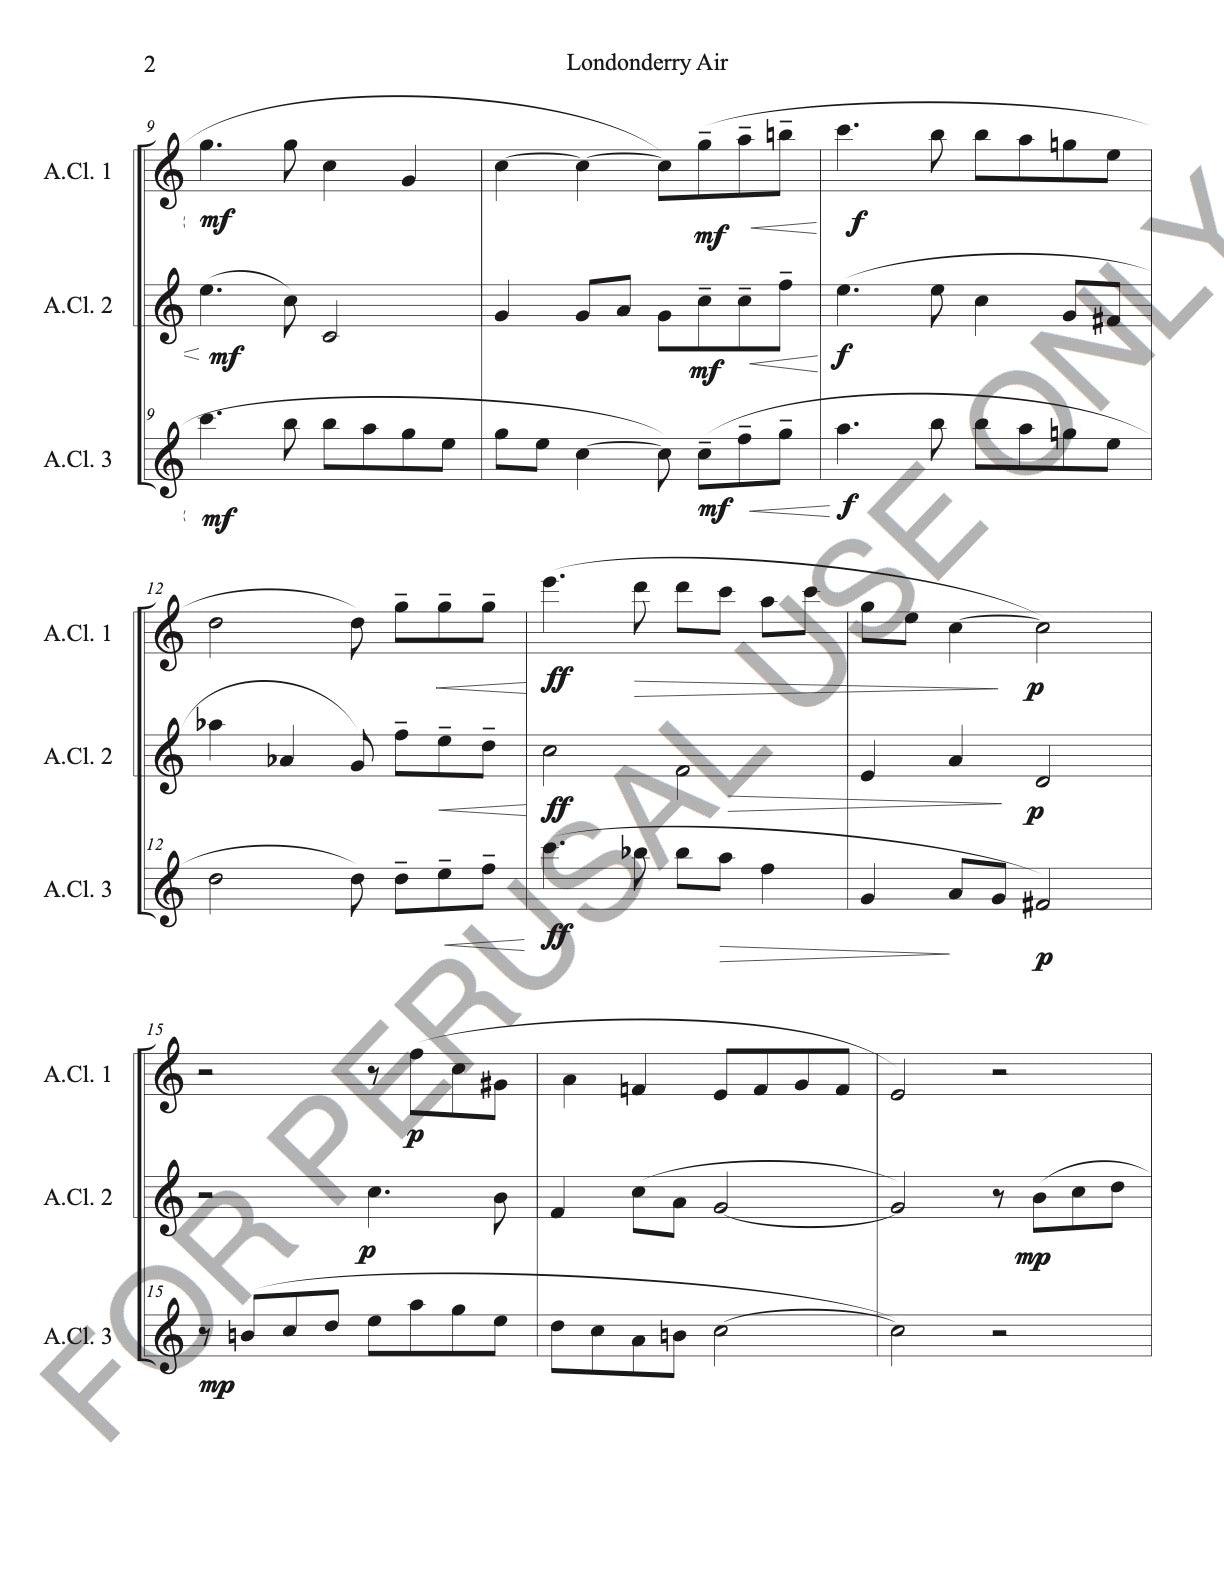 Londonderry Air for Alto Clarinet Trio (score+parts) - ChaipruckMekara